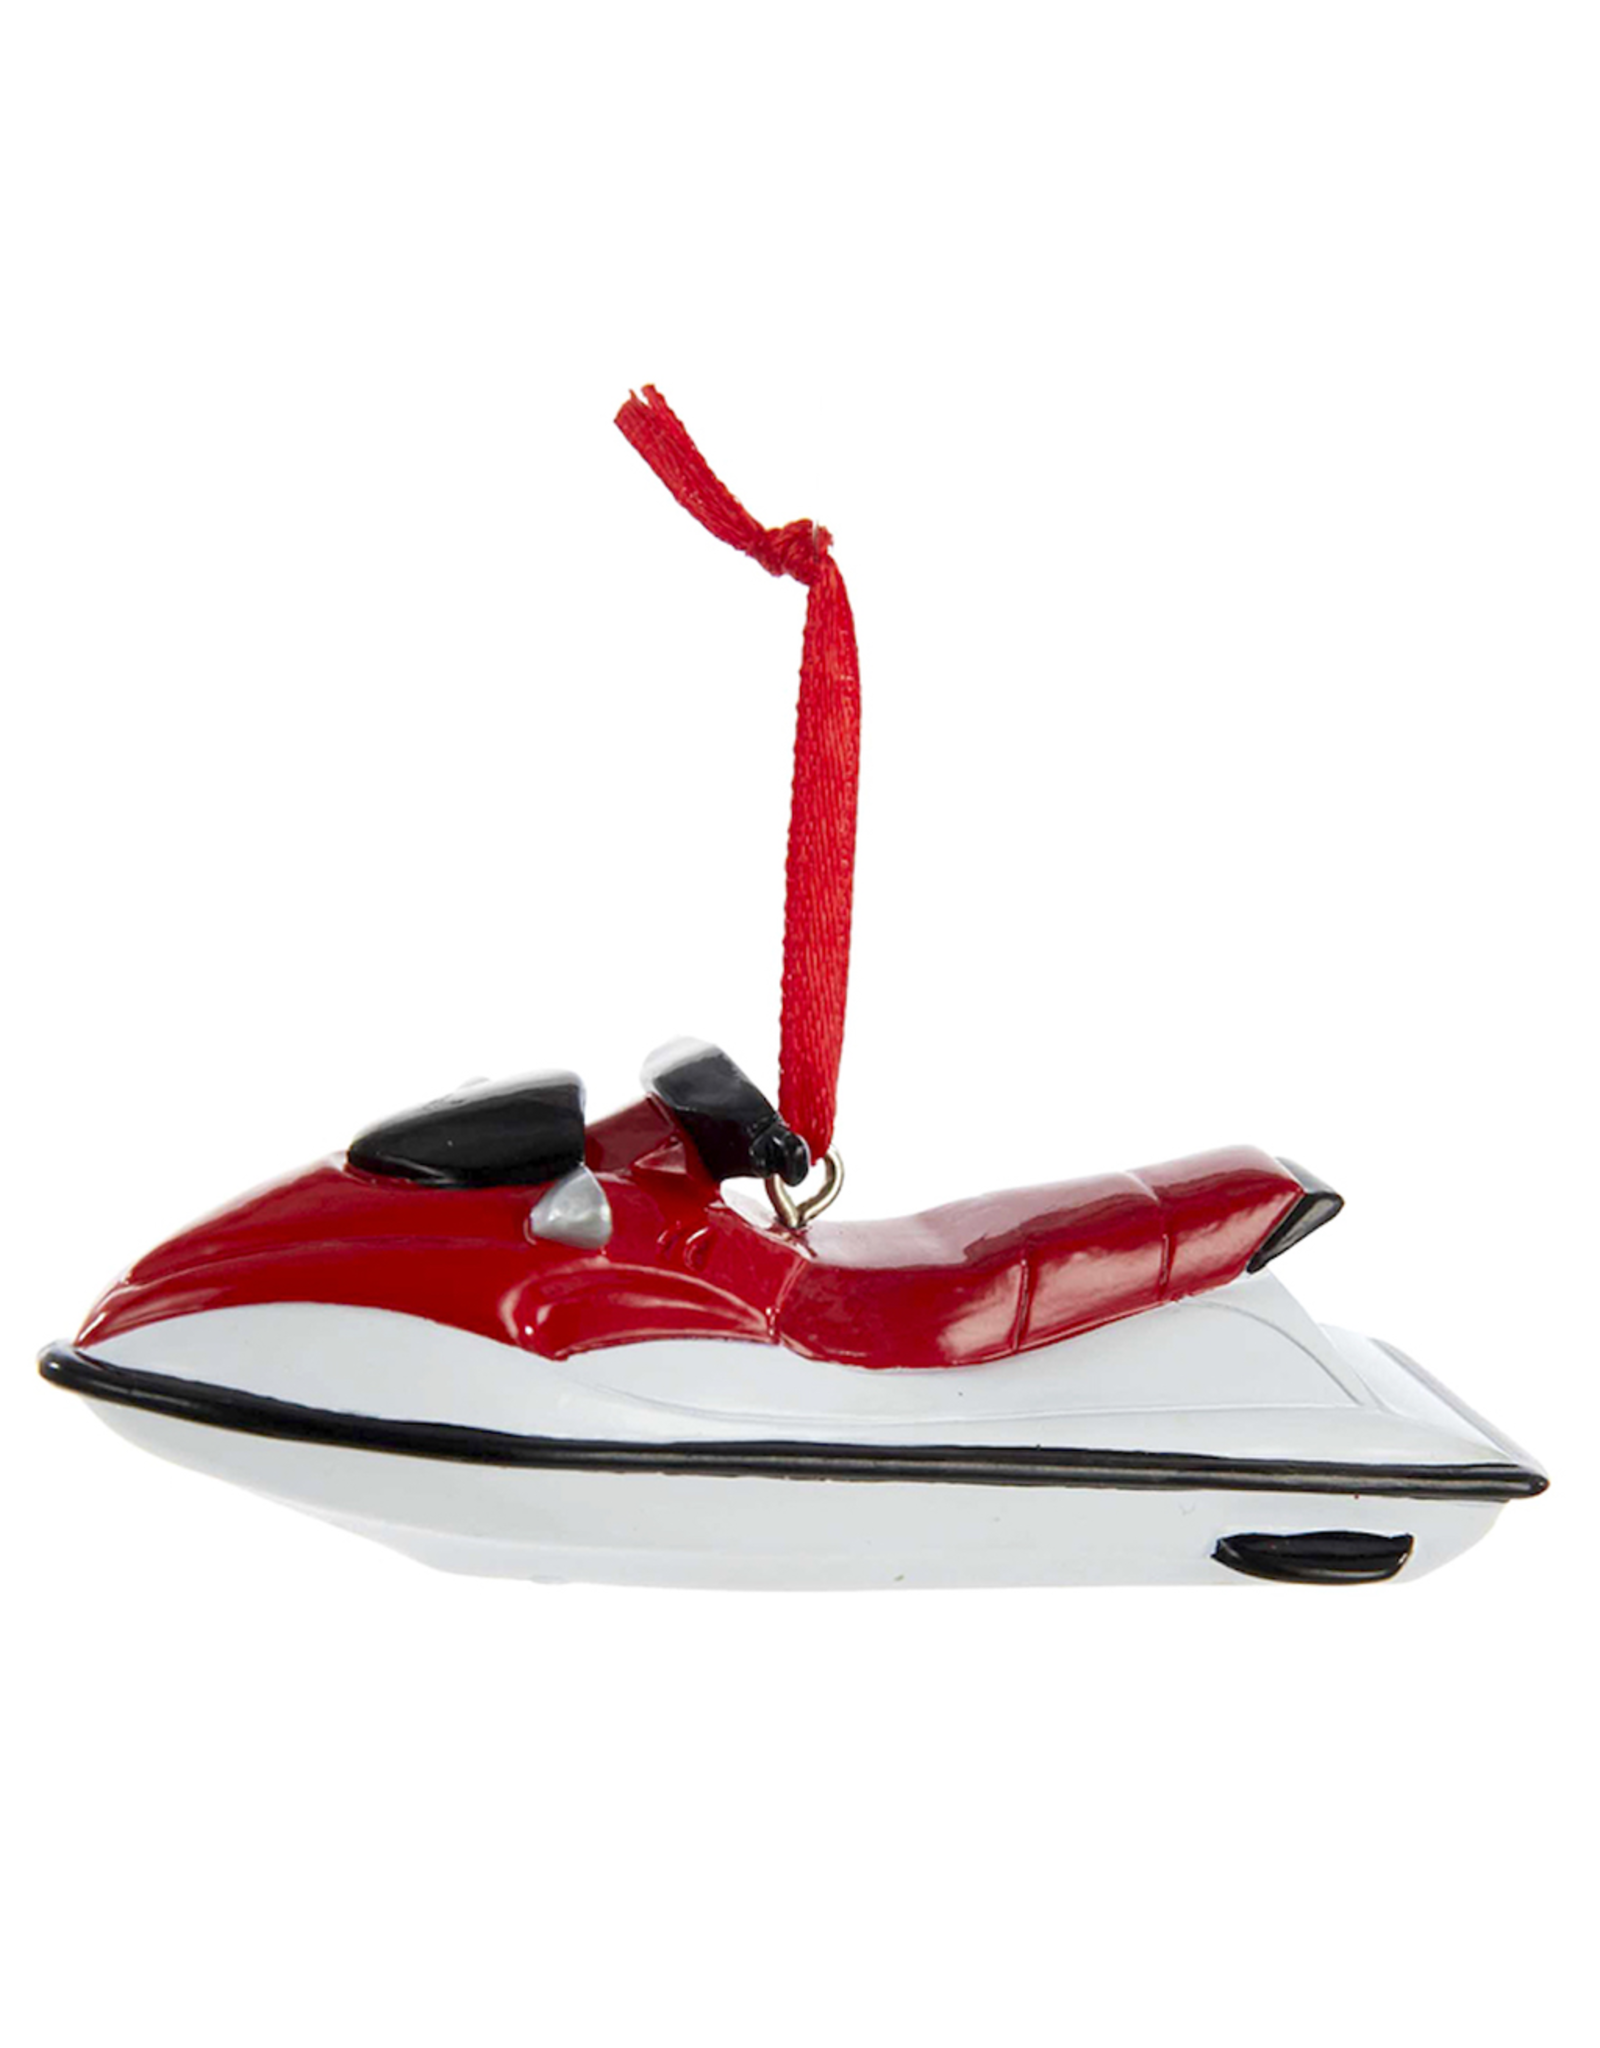 Kurt Adler Jet Ski Watercraft Watersport Christmas Ornament 3.5 inch